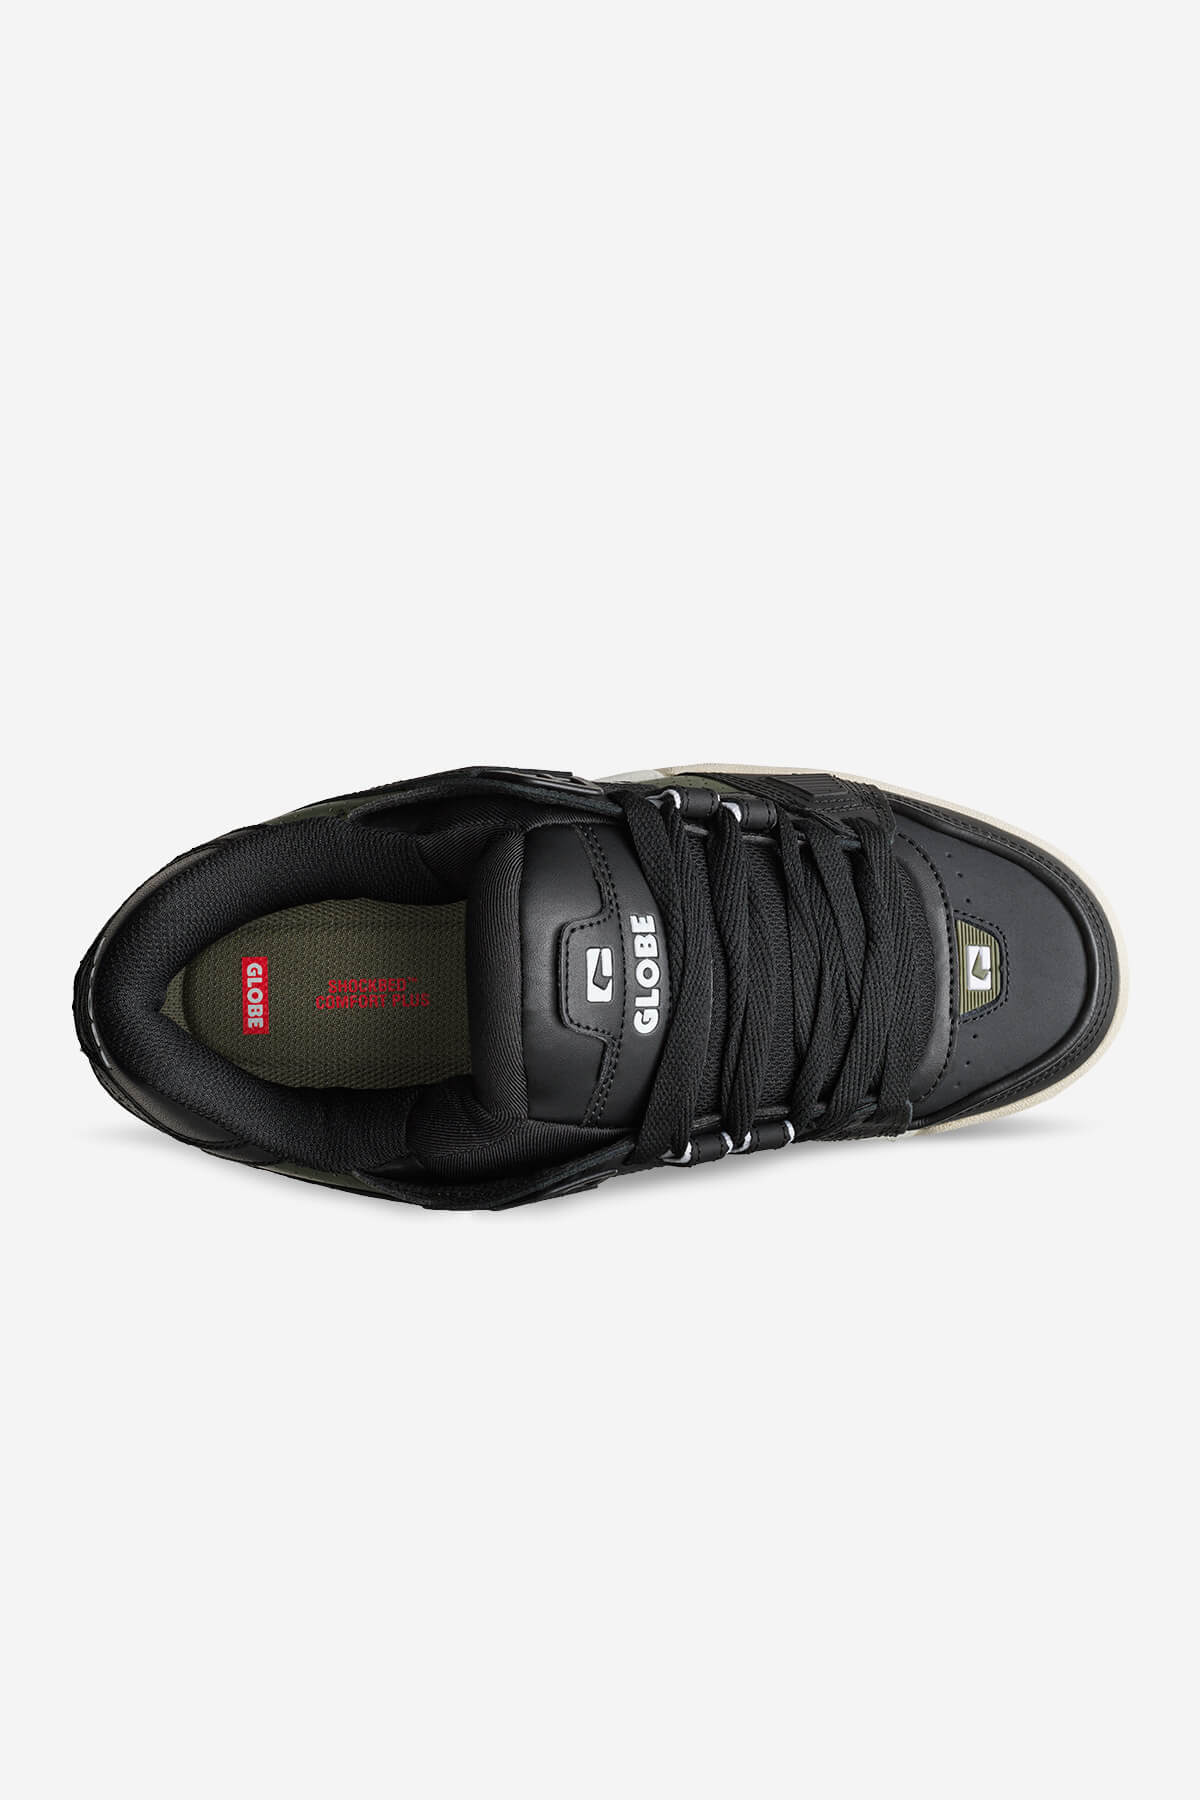 Globe - Sabre - Preto/Combat - skateboard Sapatos